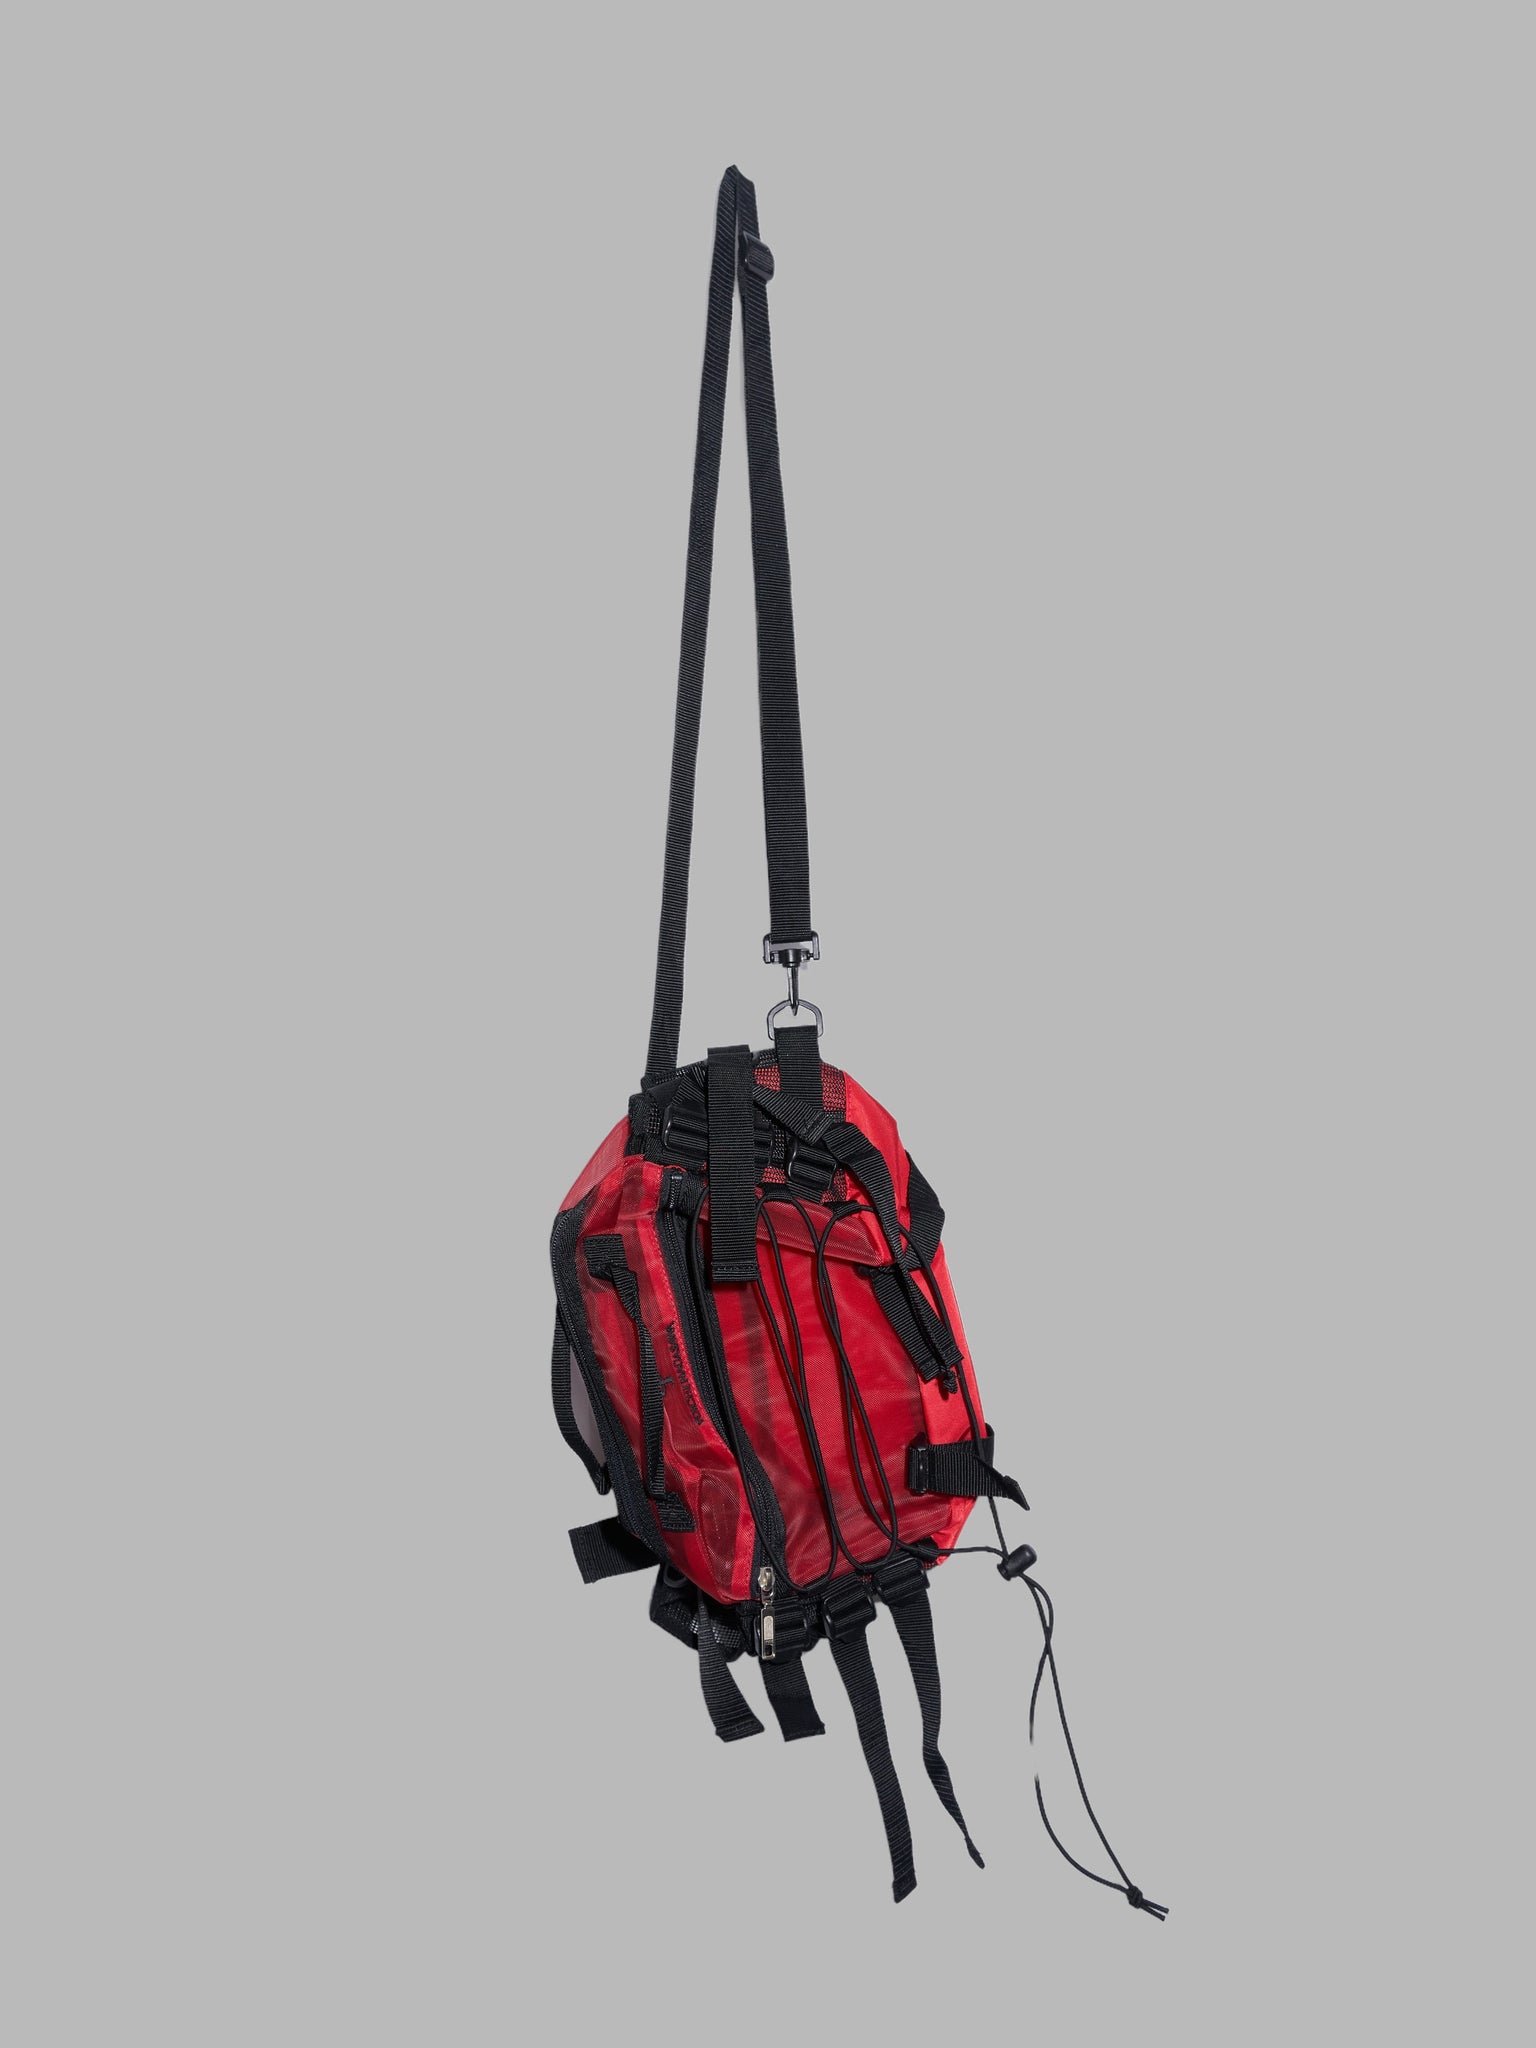 Yoichi Nagasawa 1990s red nylon mesh backpack waist bag